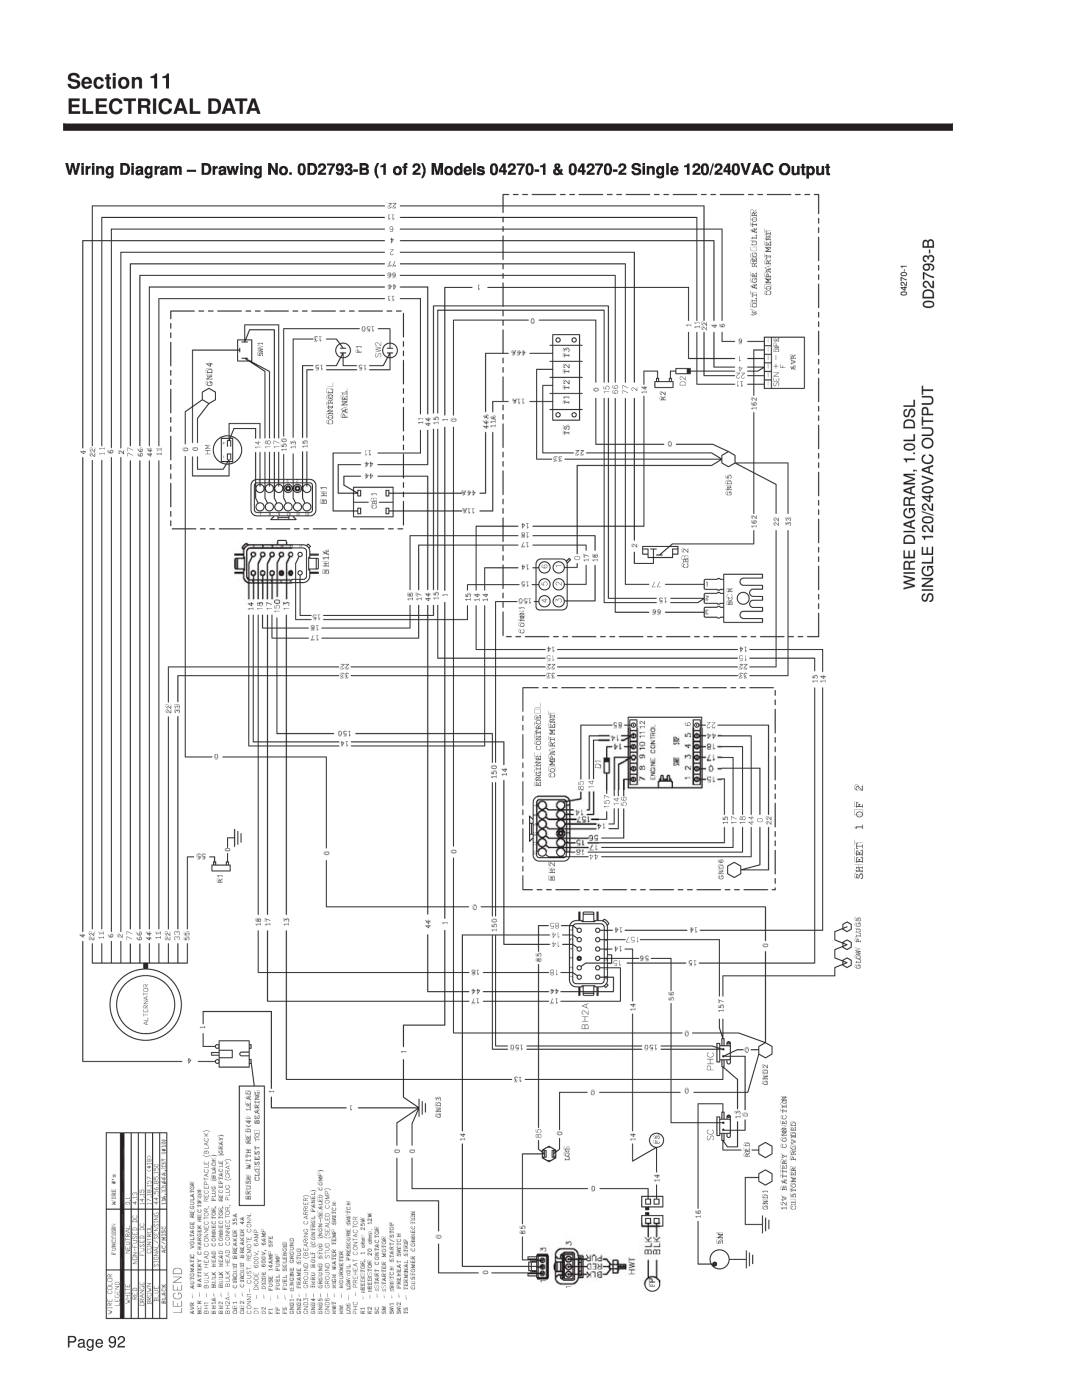 Guardian Technologies 4270 manual Data, Electrical, Section, Page, 0D2793-B, SH EET 1 O F 